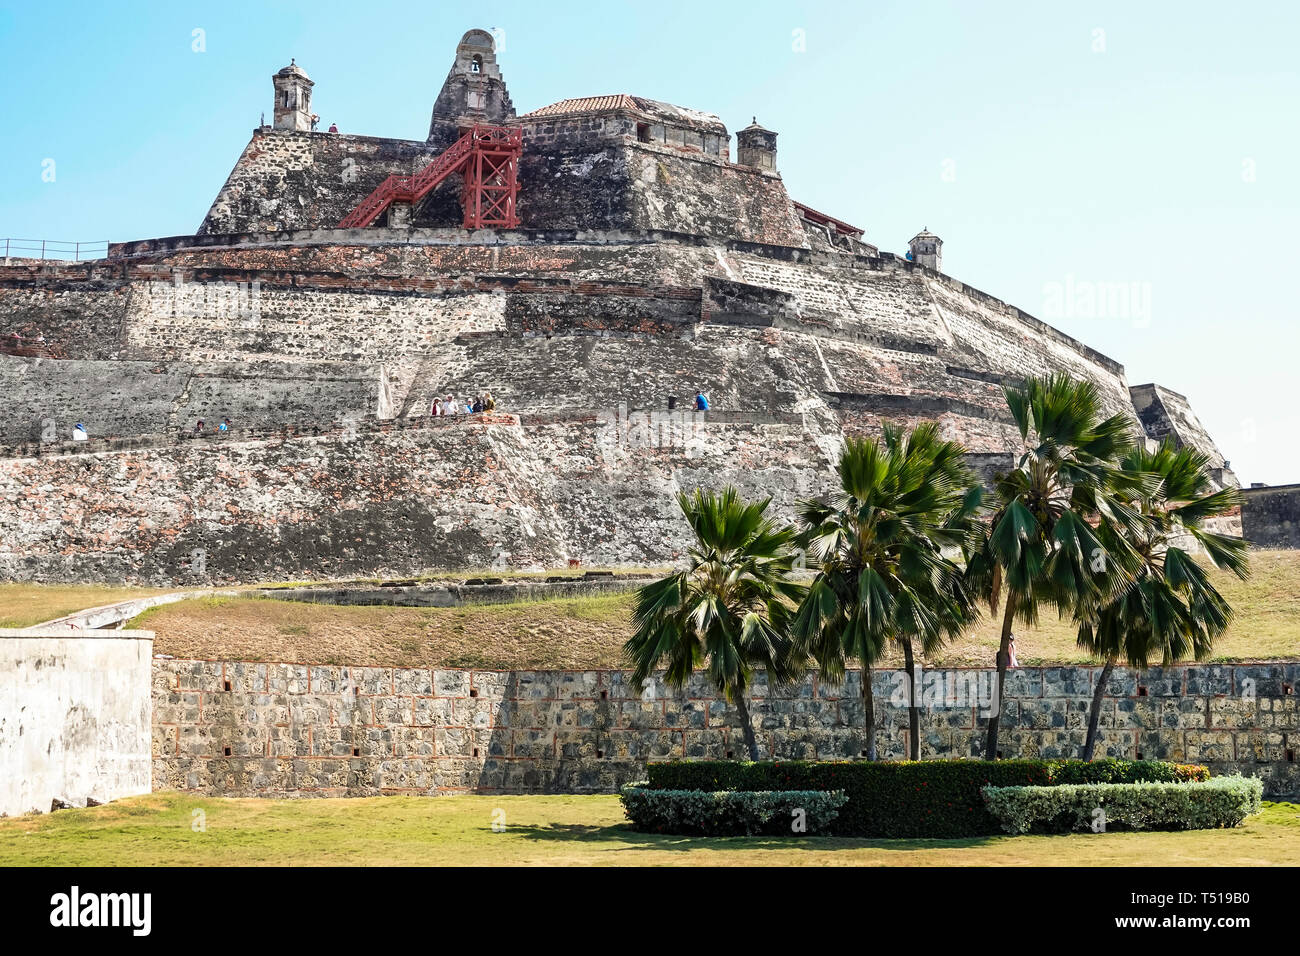 Cartagena Colombia,Castillo de San Felipe de Barajas,San Lazaro Hill,historic colonial fortress castle,World Heritage Site,exterior,COL190123014 Stock Photo